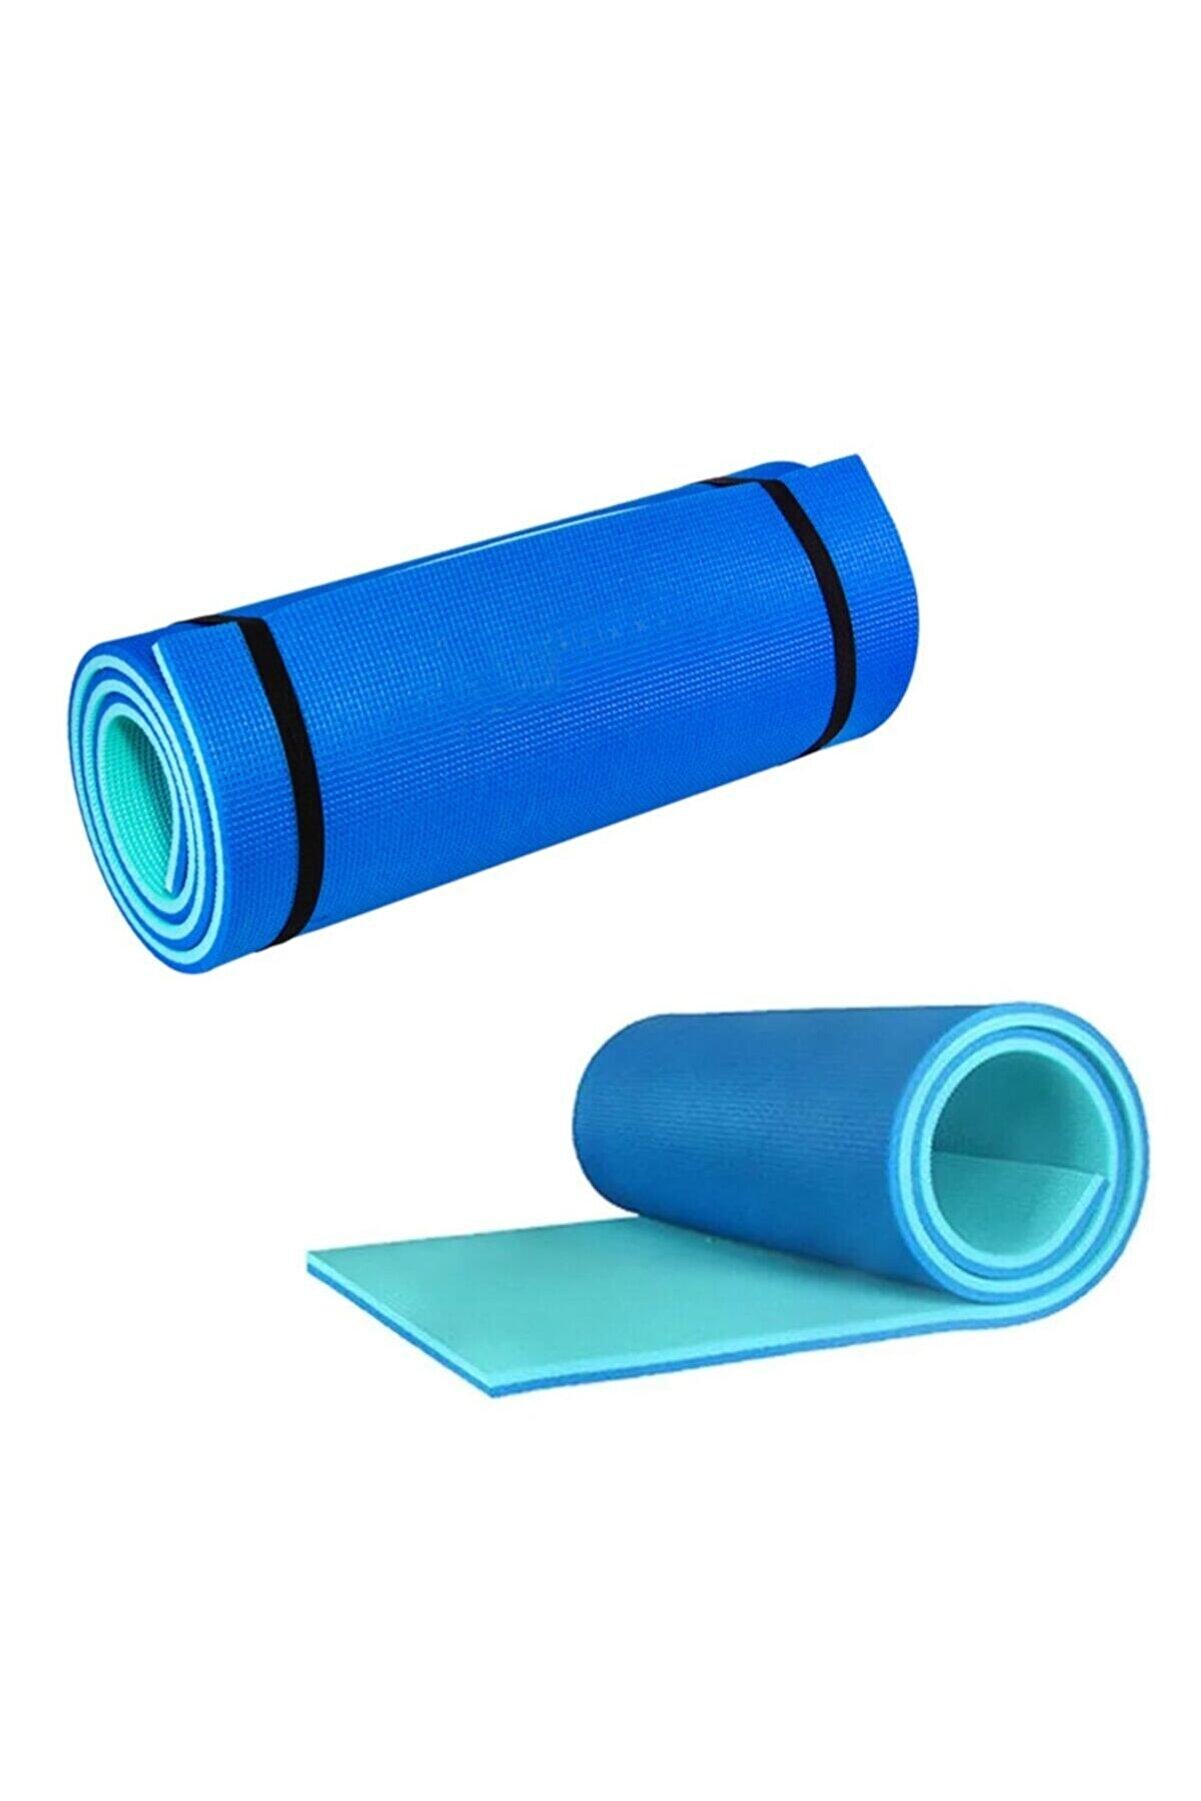 Green Hill Unisex Mavi Çift Taraflı Pilates Ve Yoga Matı 180x60 Cm